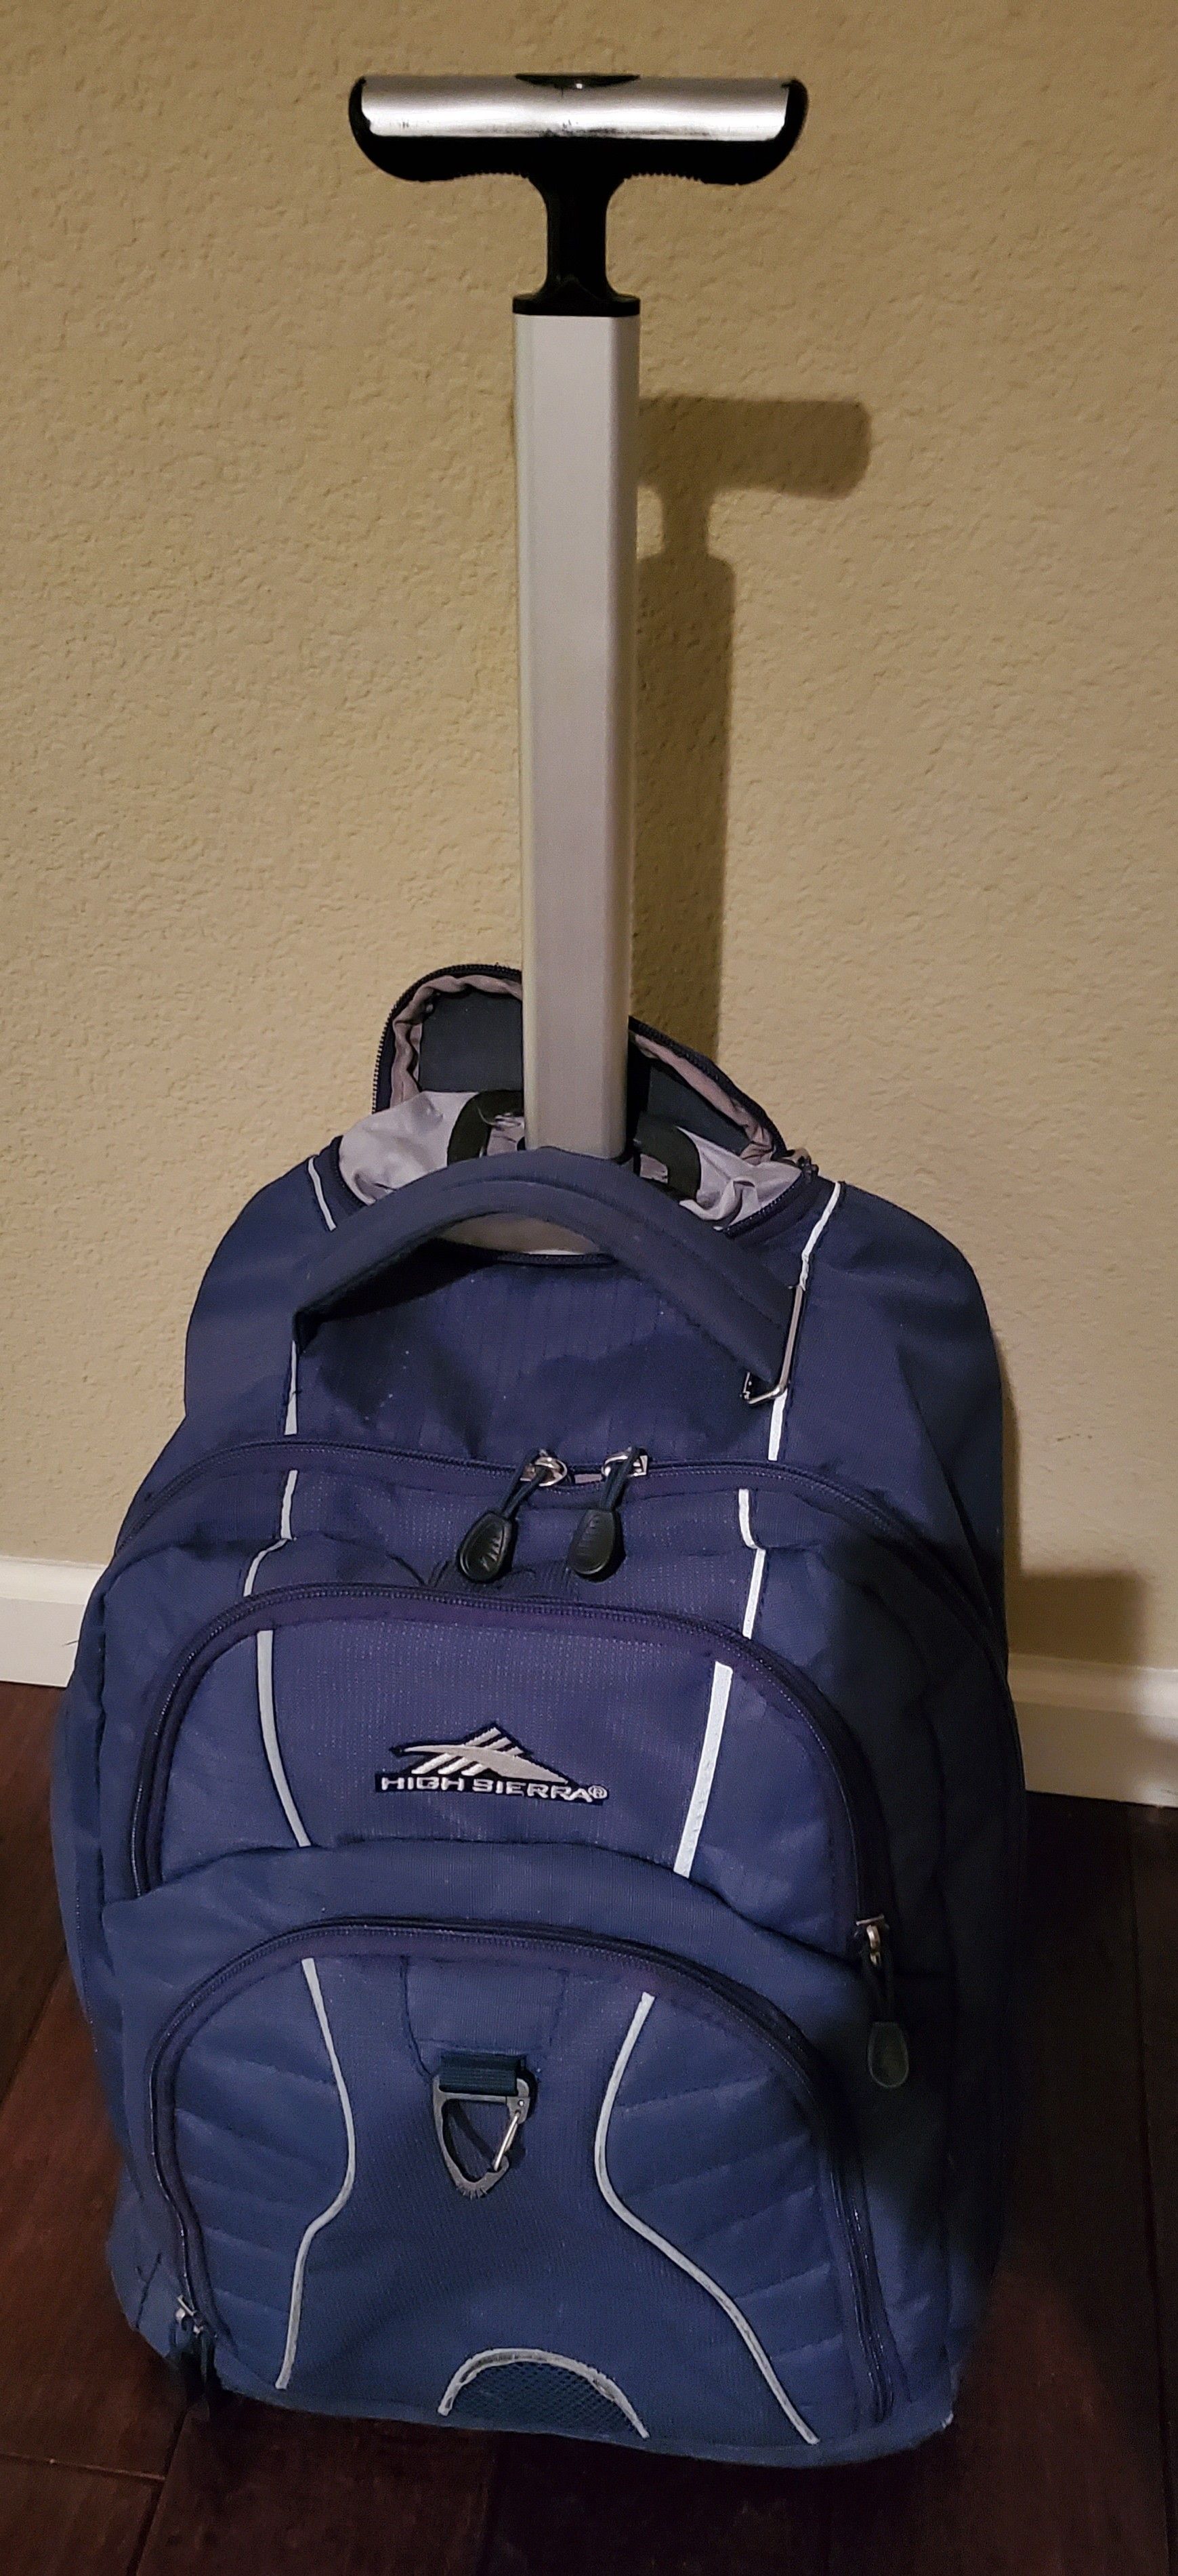 High Sierra Freewheel Wheeled roller Laptop Backpack, 15-inch